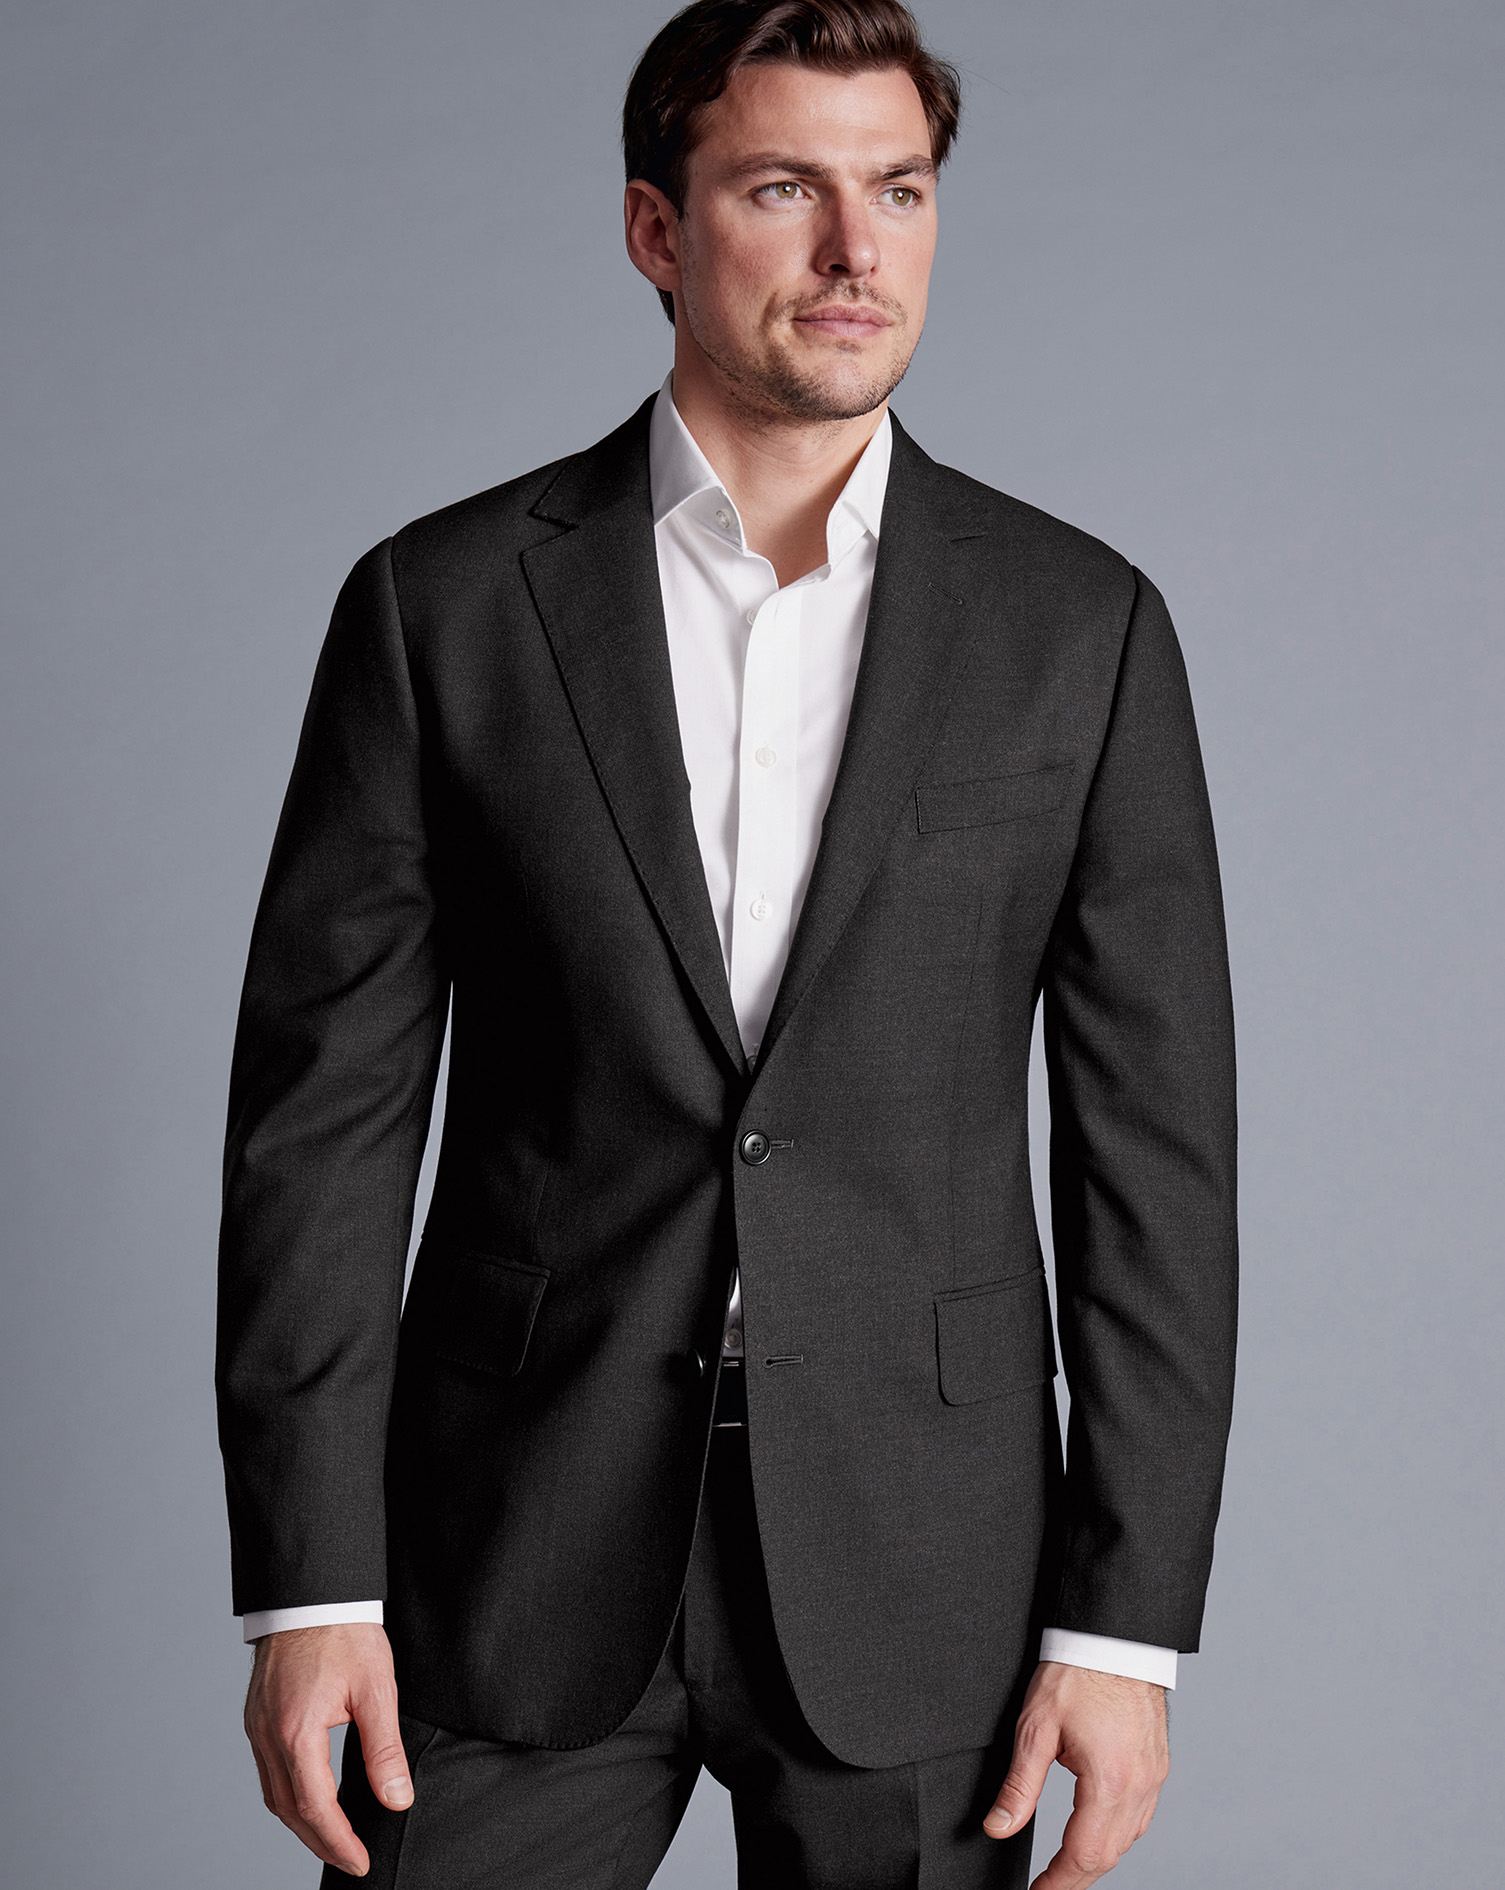 Men's Charles Tyrwhitt Italian Luxury Suit na Jacket - Charcoal Grey Size 38R Wool
